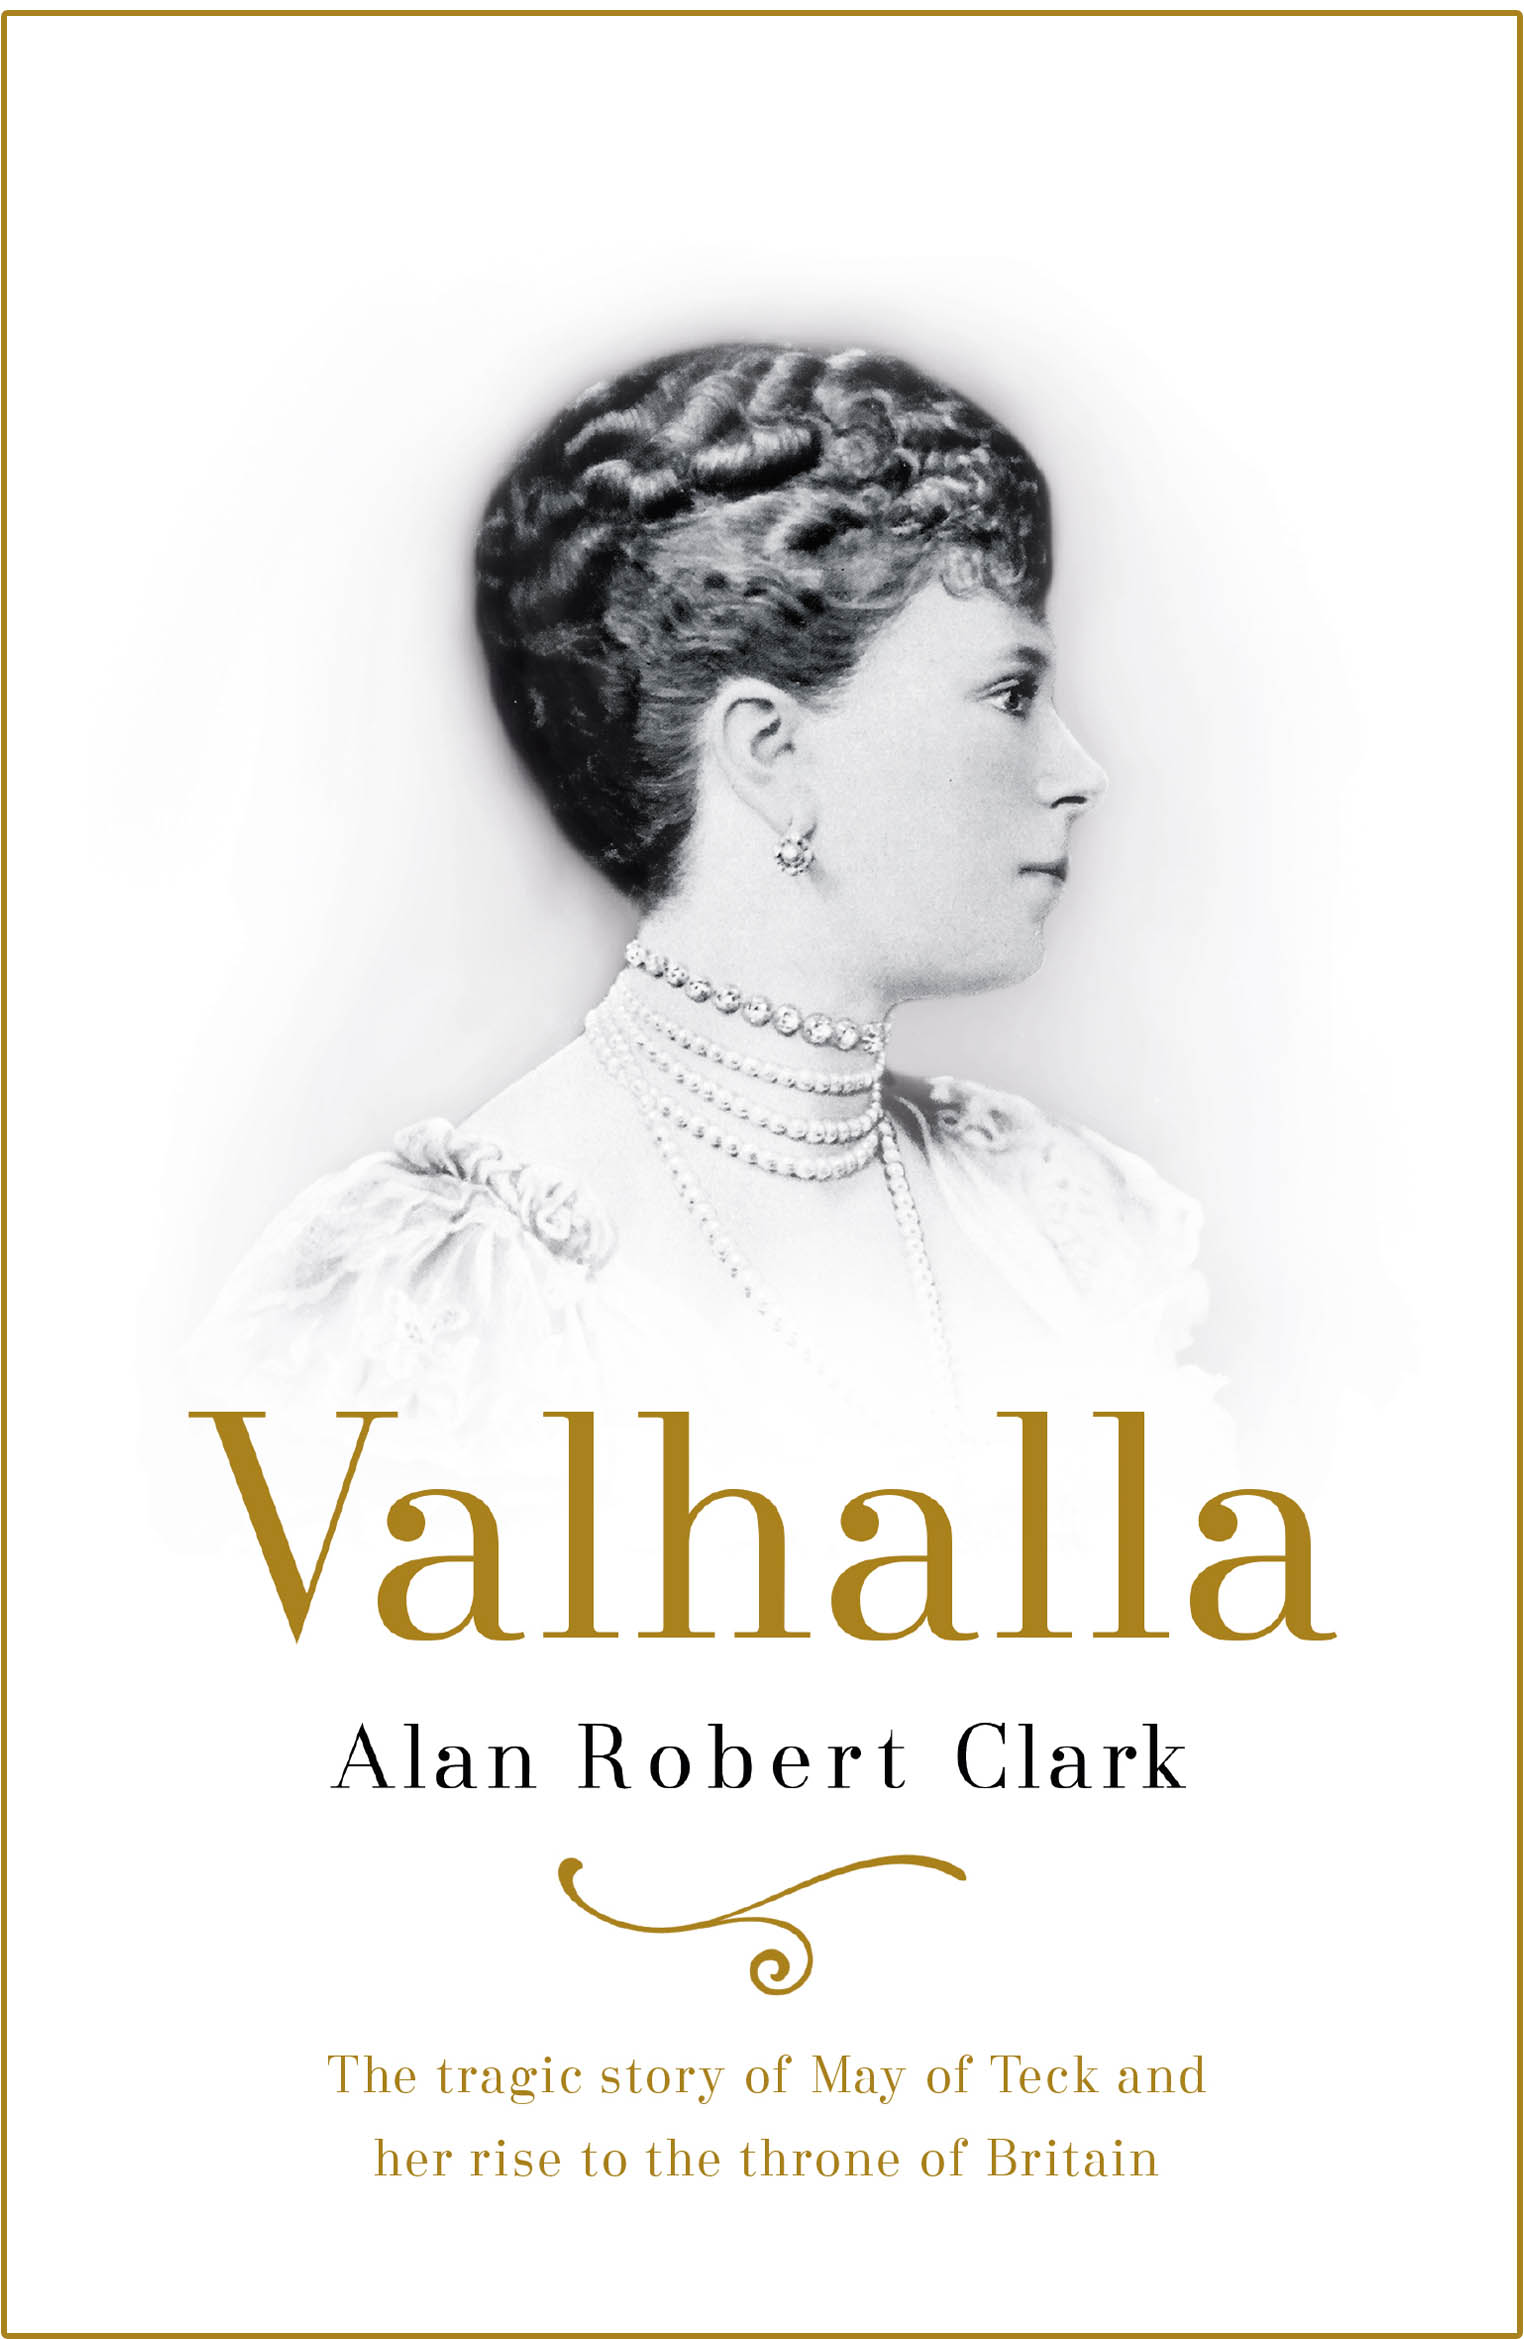 New Fiction - Valhalla by Alan Robert Clark